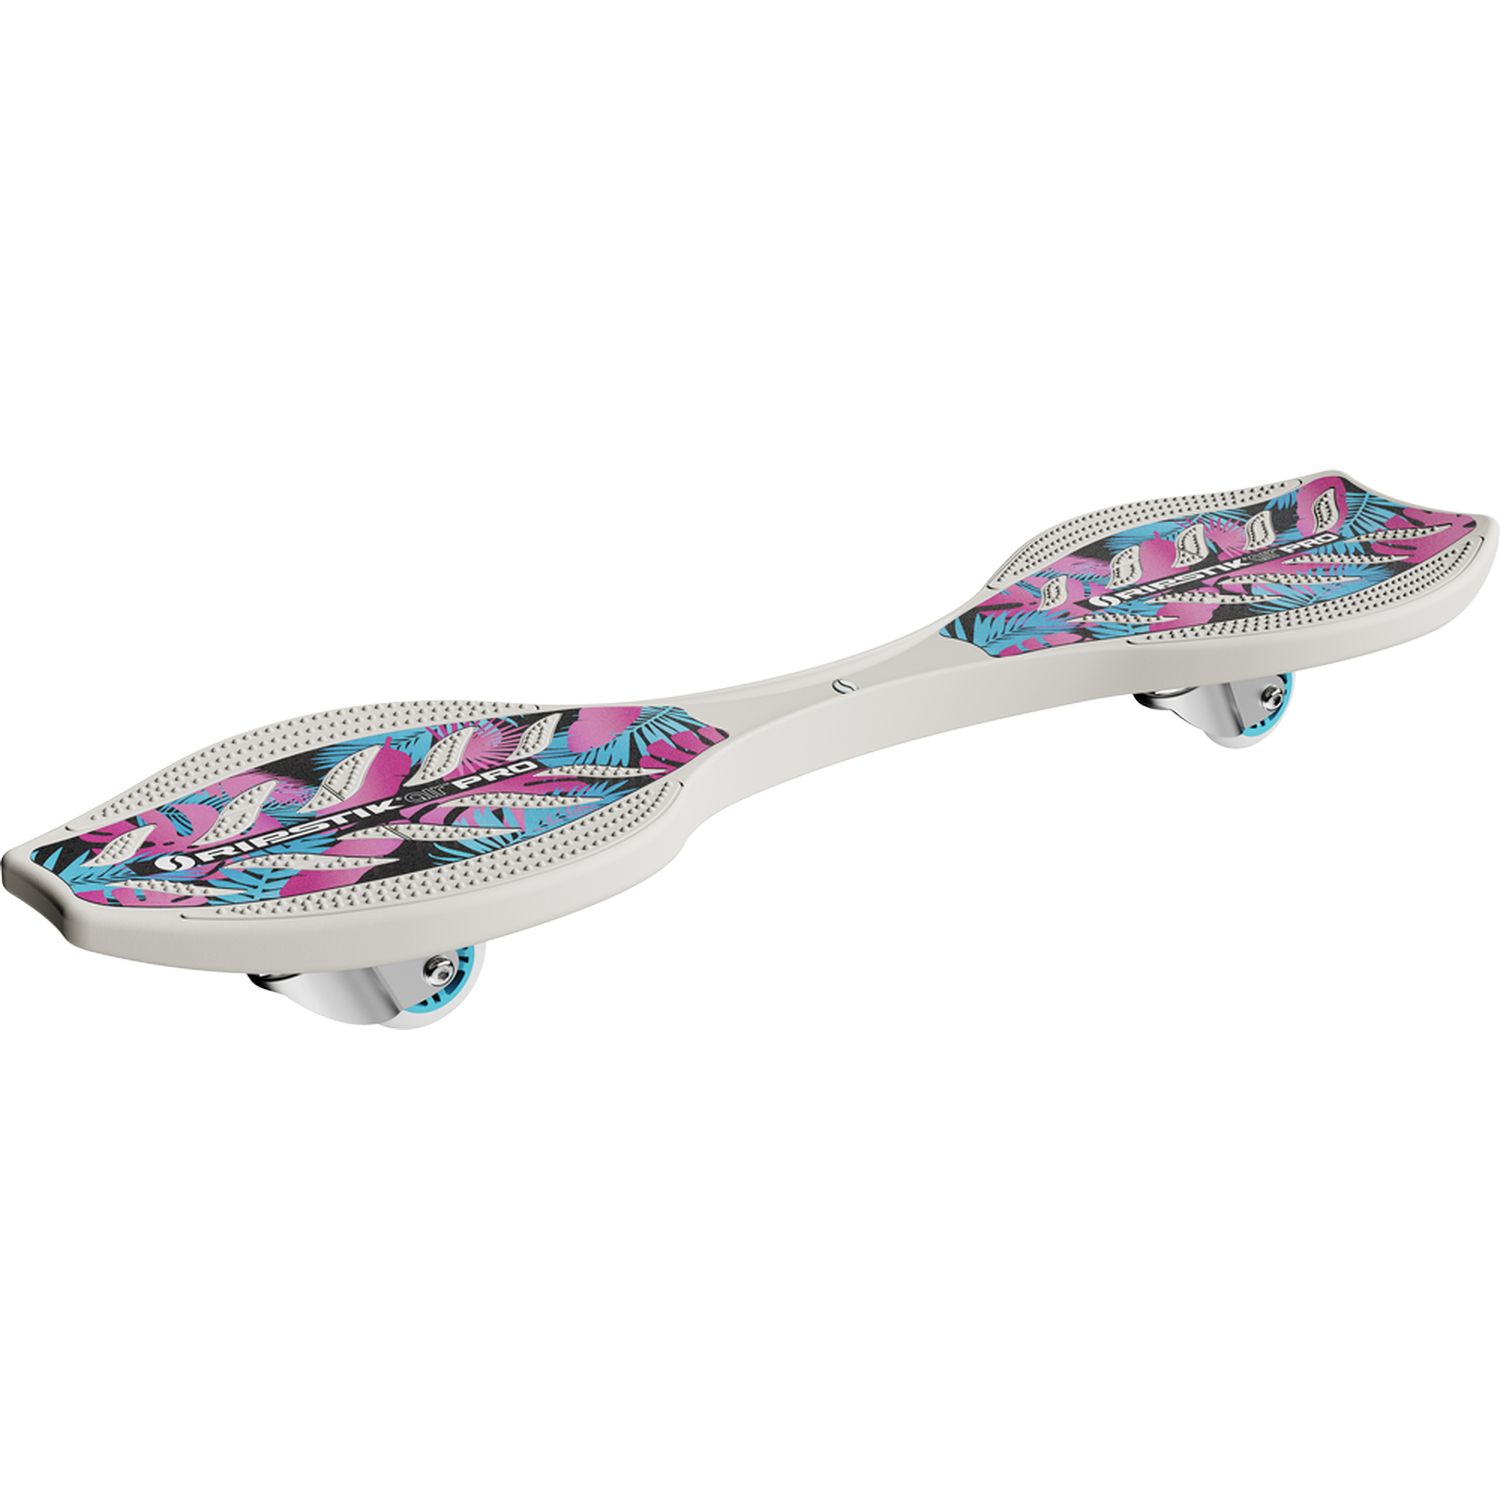 Роллерсёрф двухколёсный скейтборд Razor RipStik Air Pro Special Edition, белый